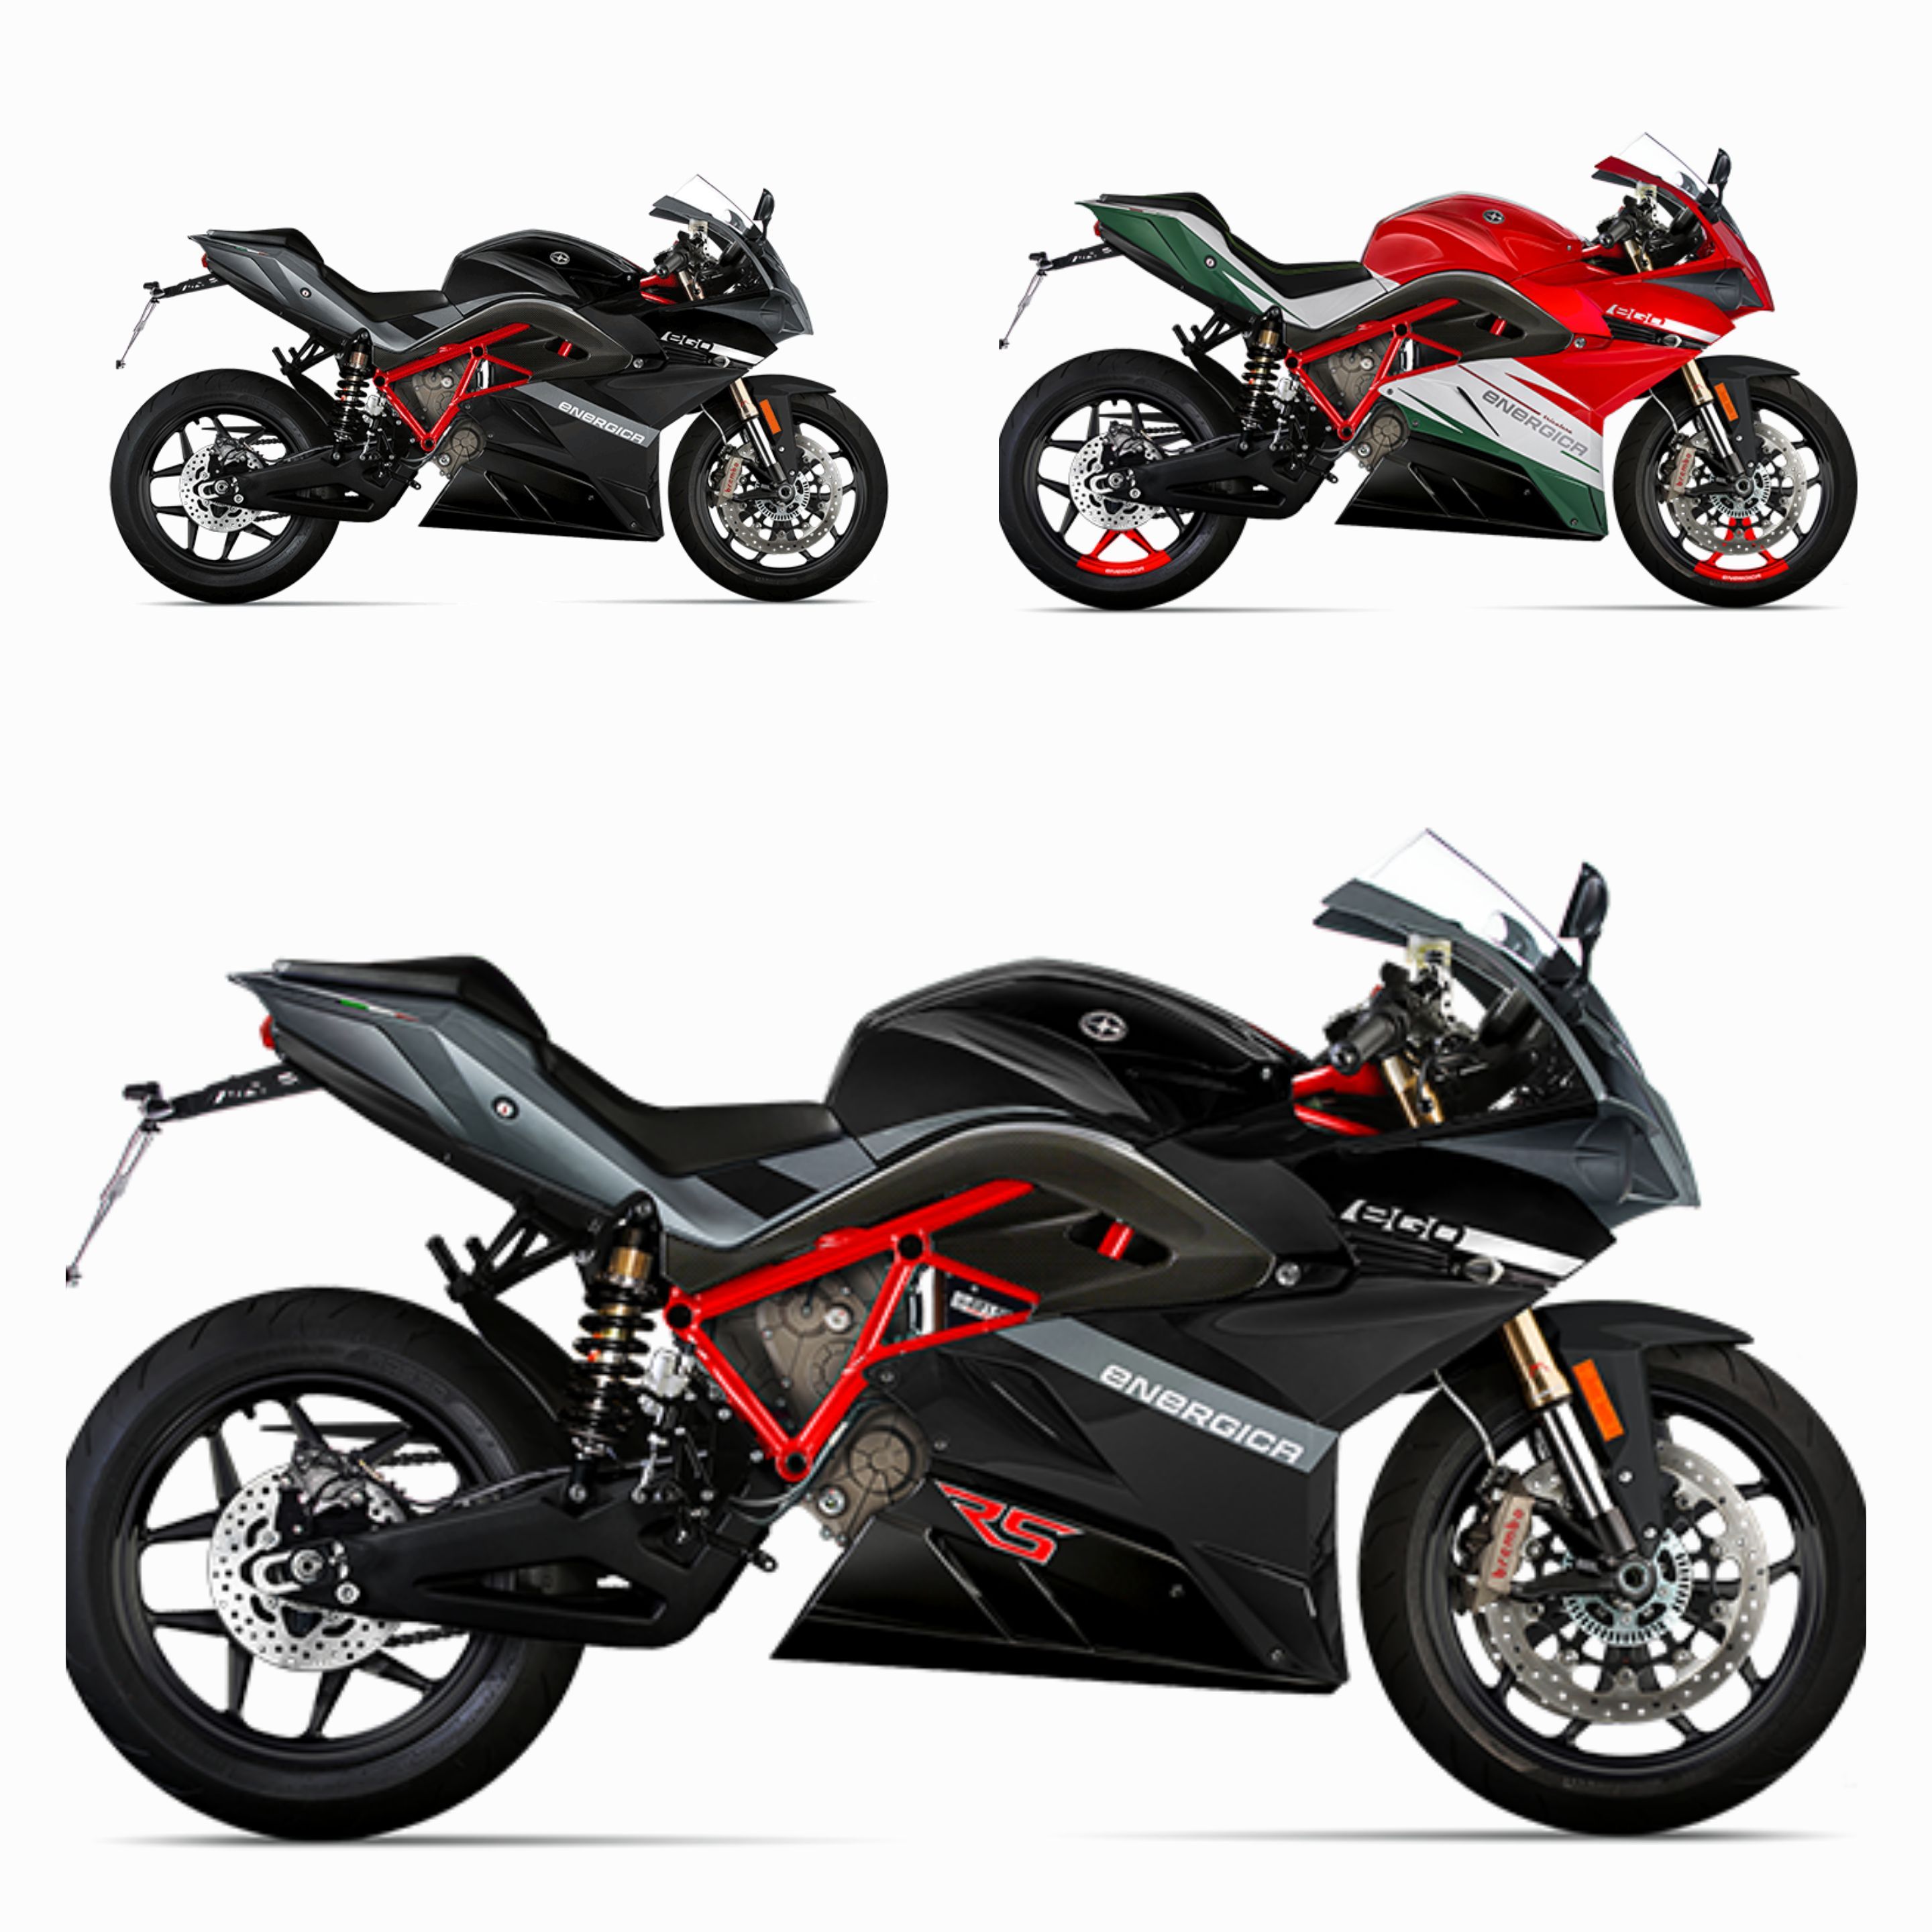 Tiga tipe pilihan dari Energica Ego, motor sport fairing bertenaga listrik buatan Italia